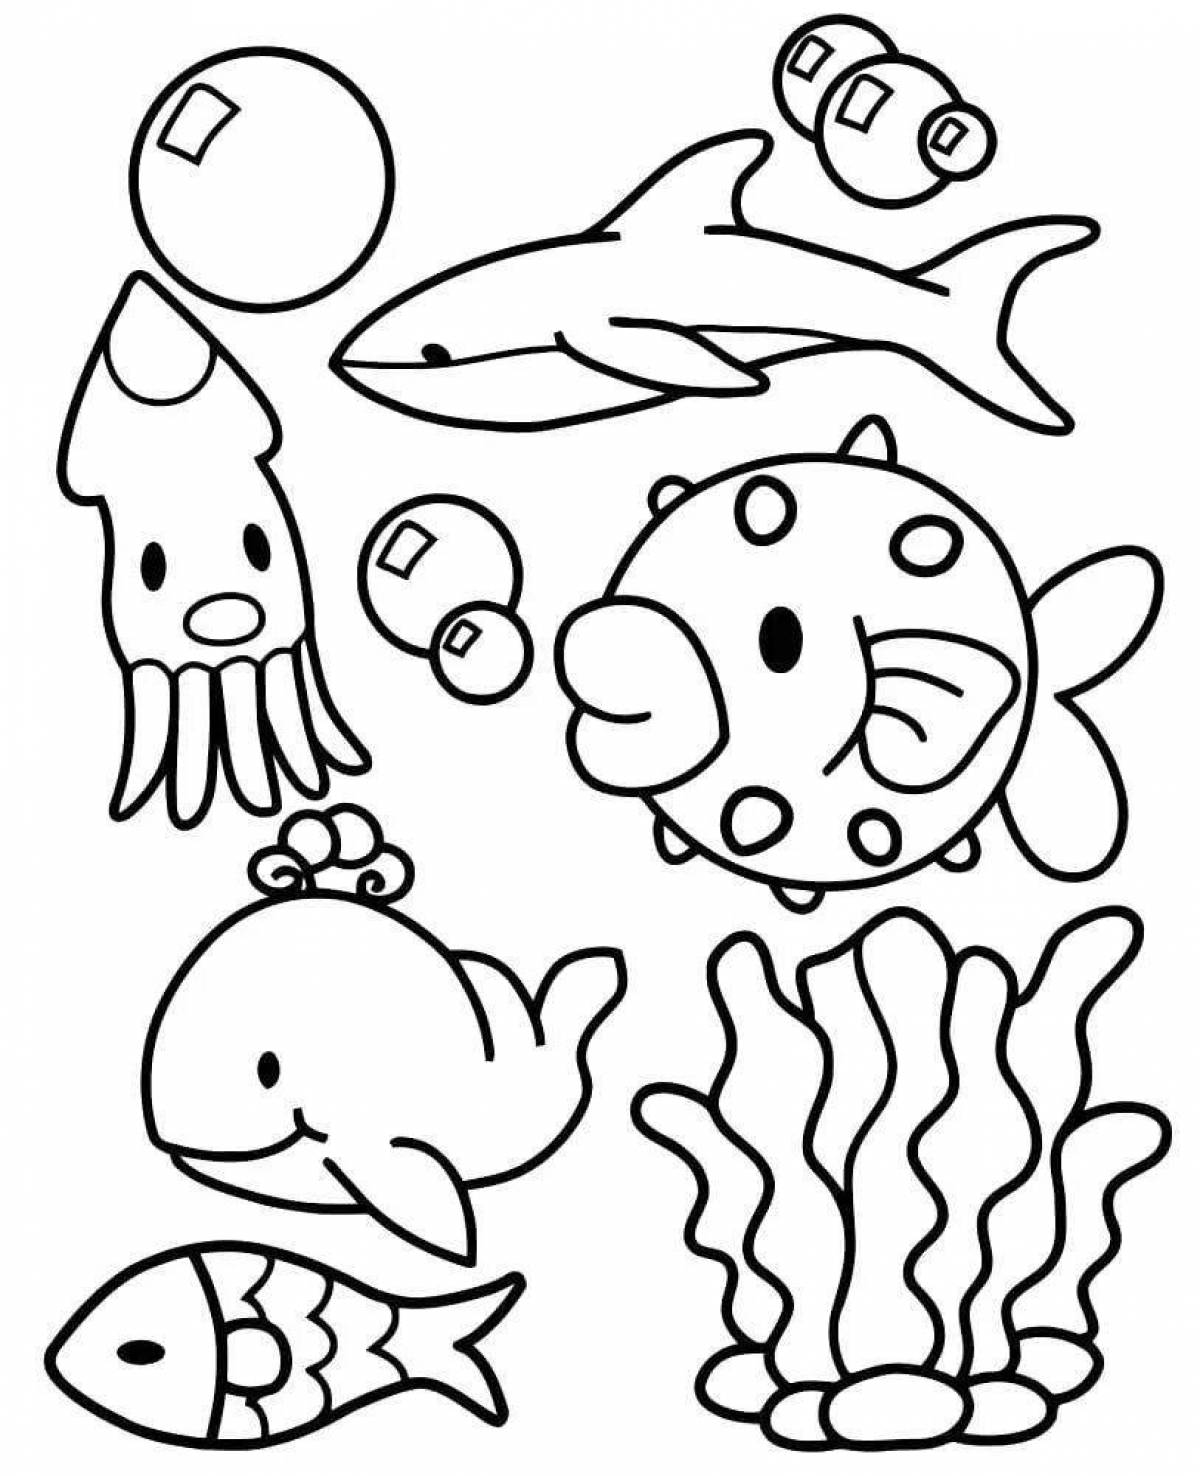 Glorious aquatic life coloring book